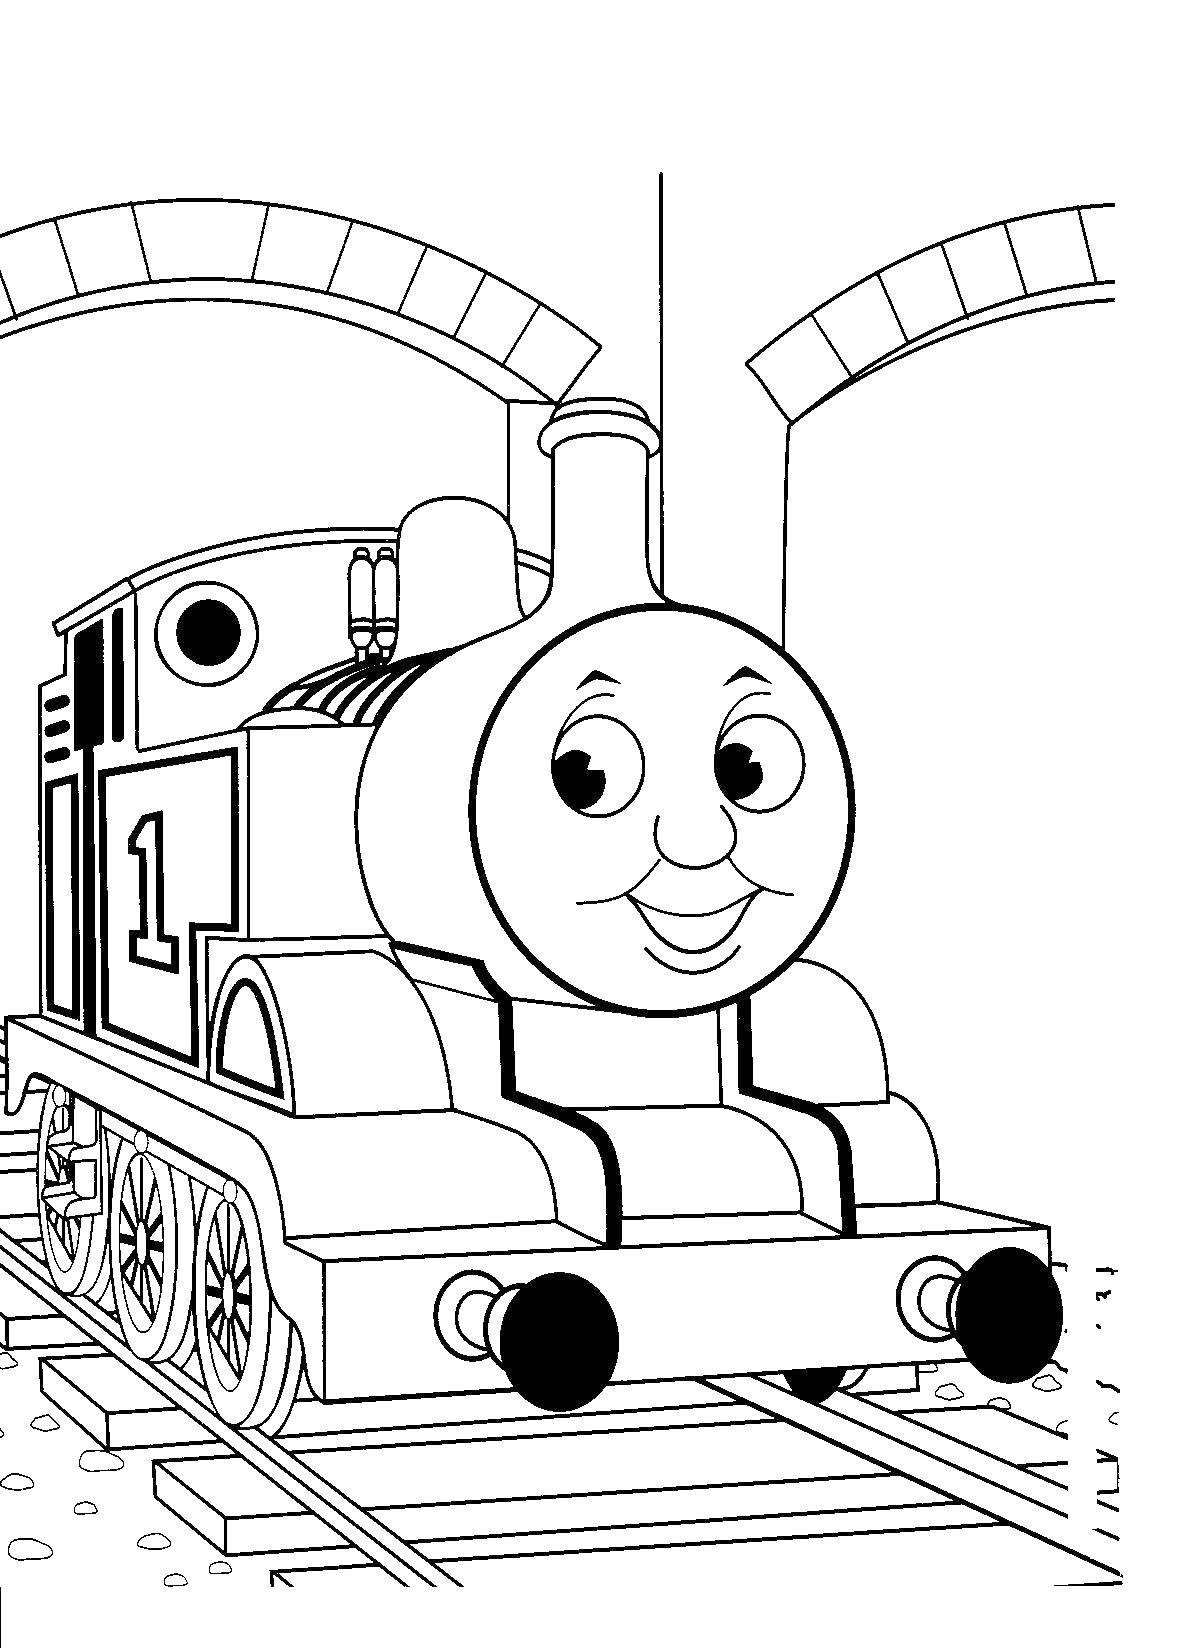 Coloring Thomas the tank engine. Category cartoons. Tags:  cartoons, Thomas the train.